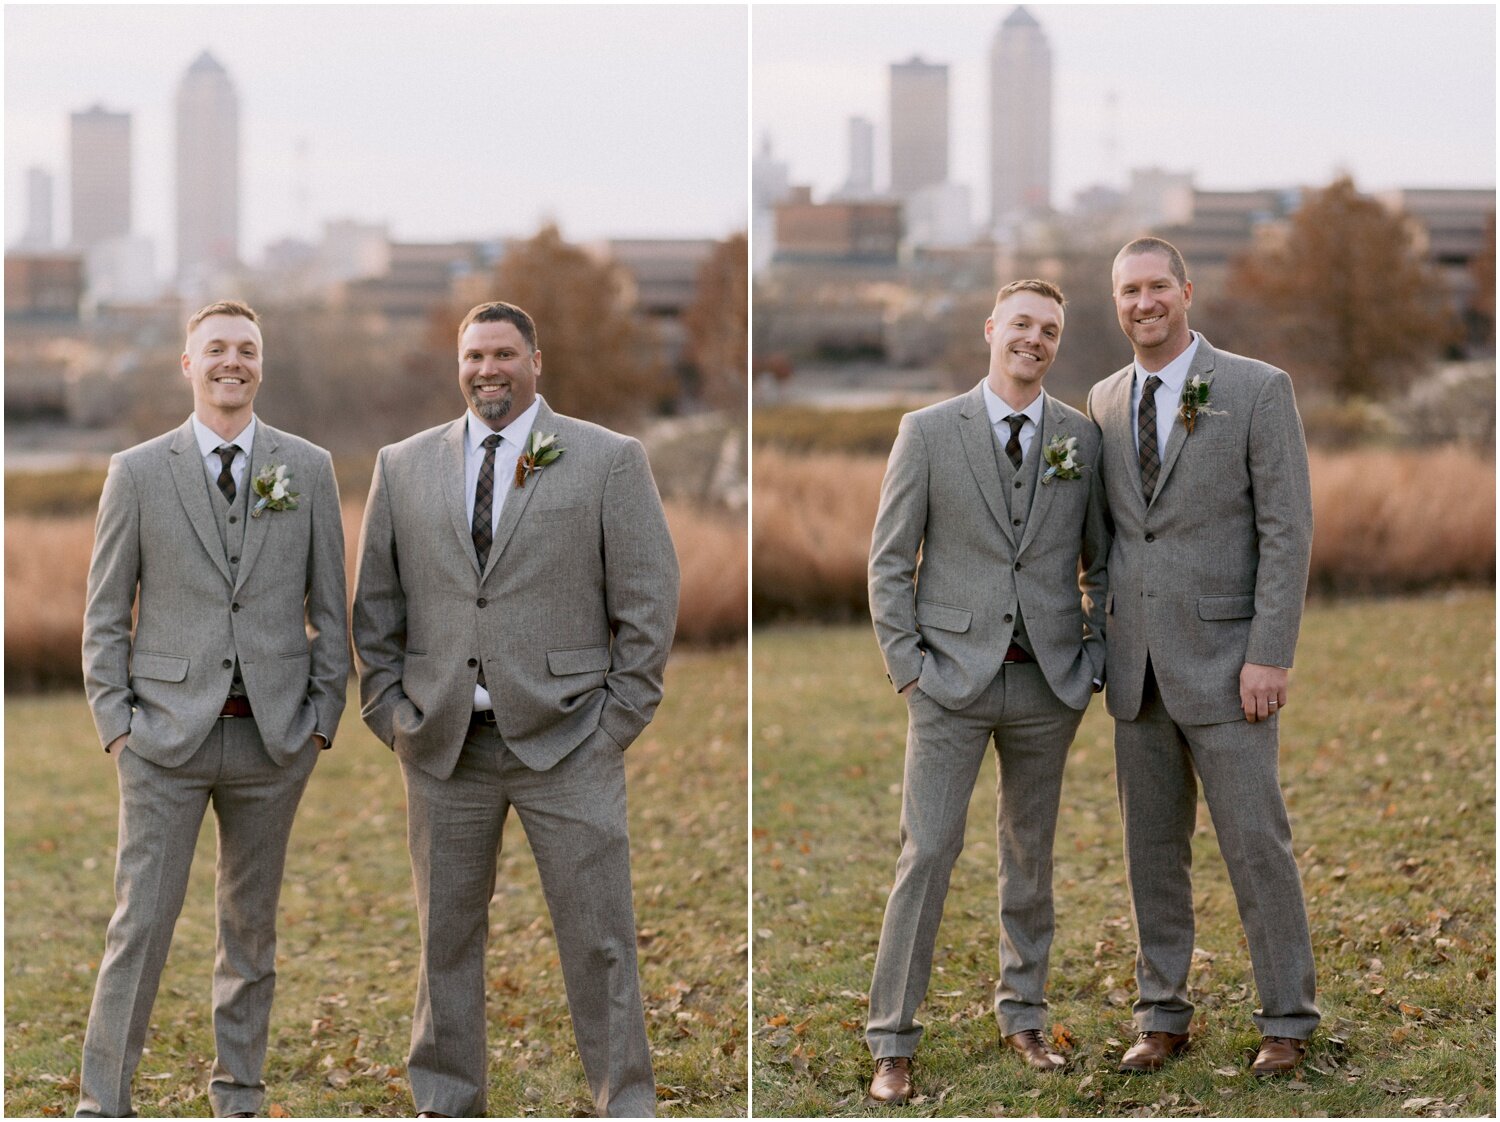 Andrew Ferren Photography - Des Moines Iowa Wedding Photographer - Destination - Engagement - Videography - Videographer - The River Center56.jpg